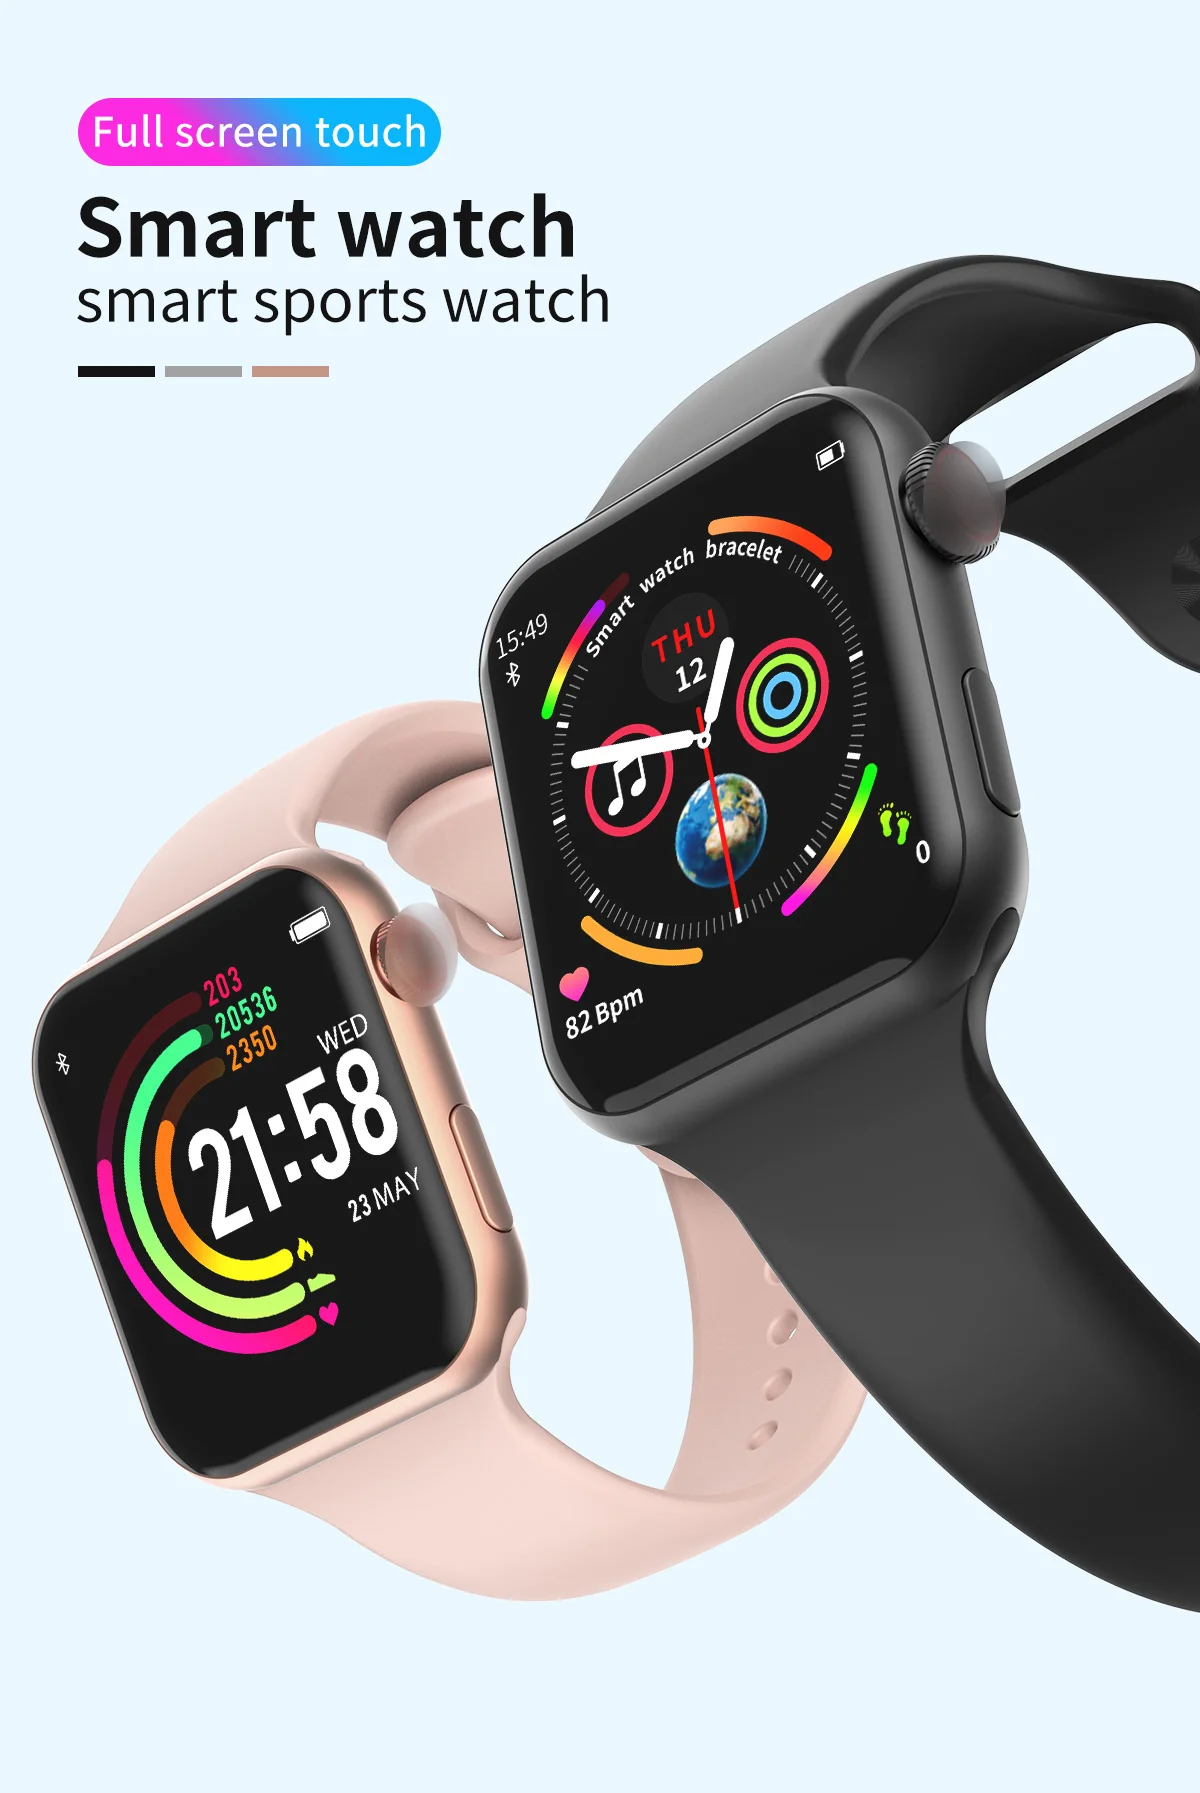 F10 Smartwatch IP68 водонепроницаемый монитор сердечного ритма Bluetooth Спорт фитнес трекер для мужчин для Android iPhone xiaomi телефон PK iwo 8 4